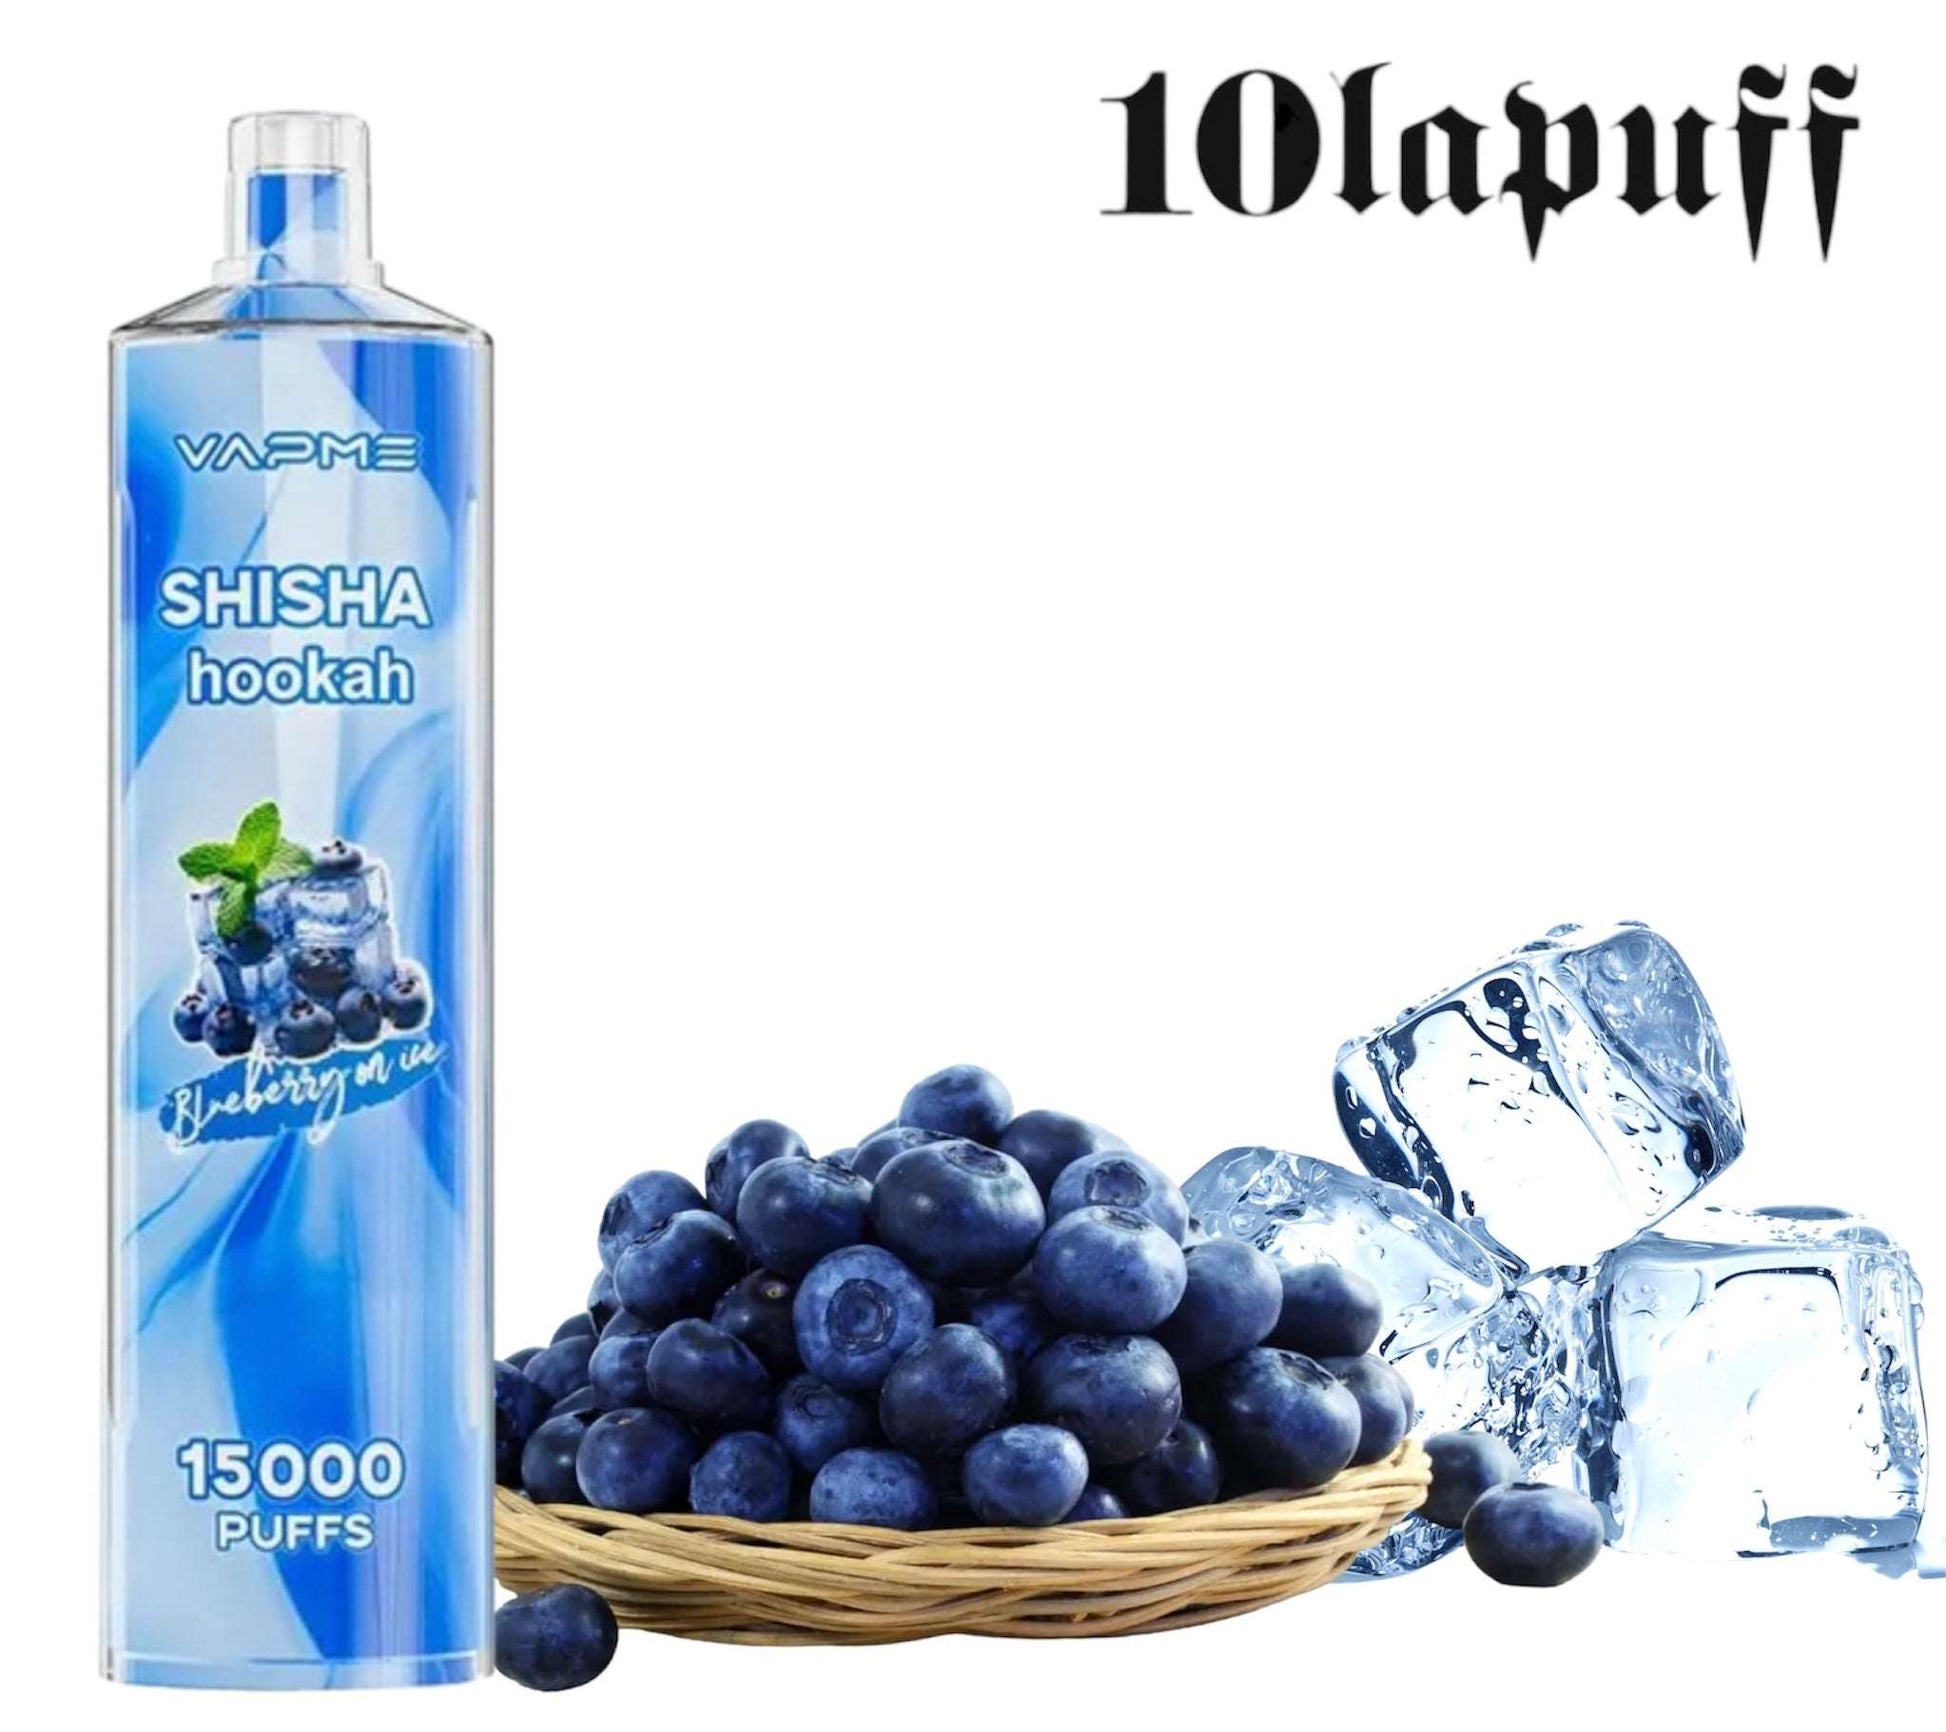 PUFF 15000 VAPME SHISHA HOOKAH - 12 Parfums  -